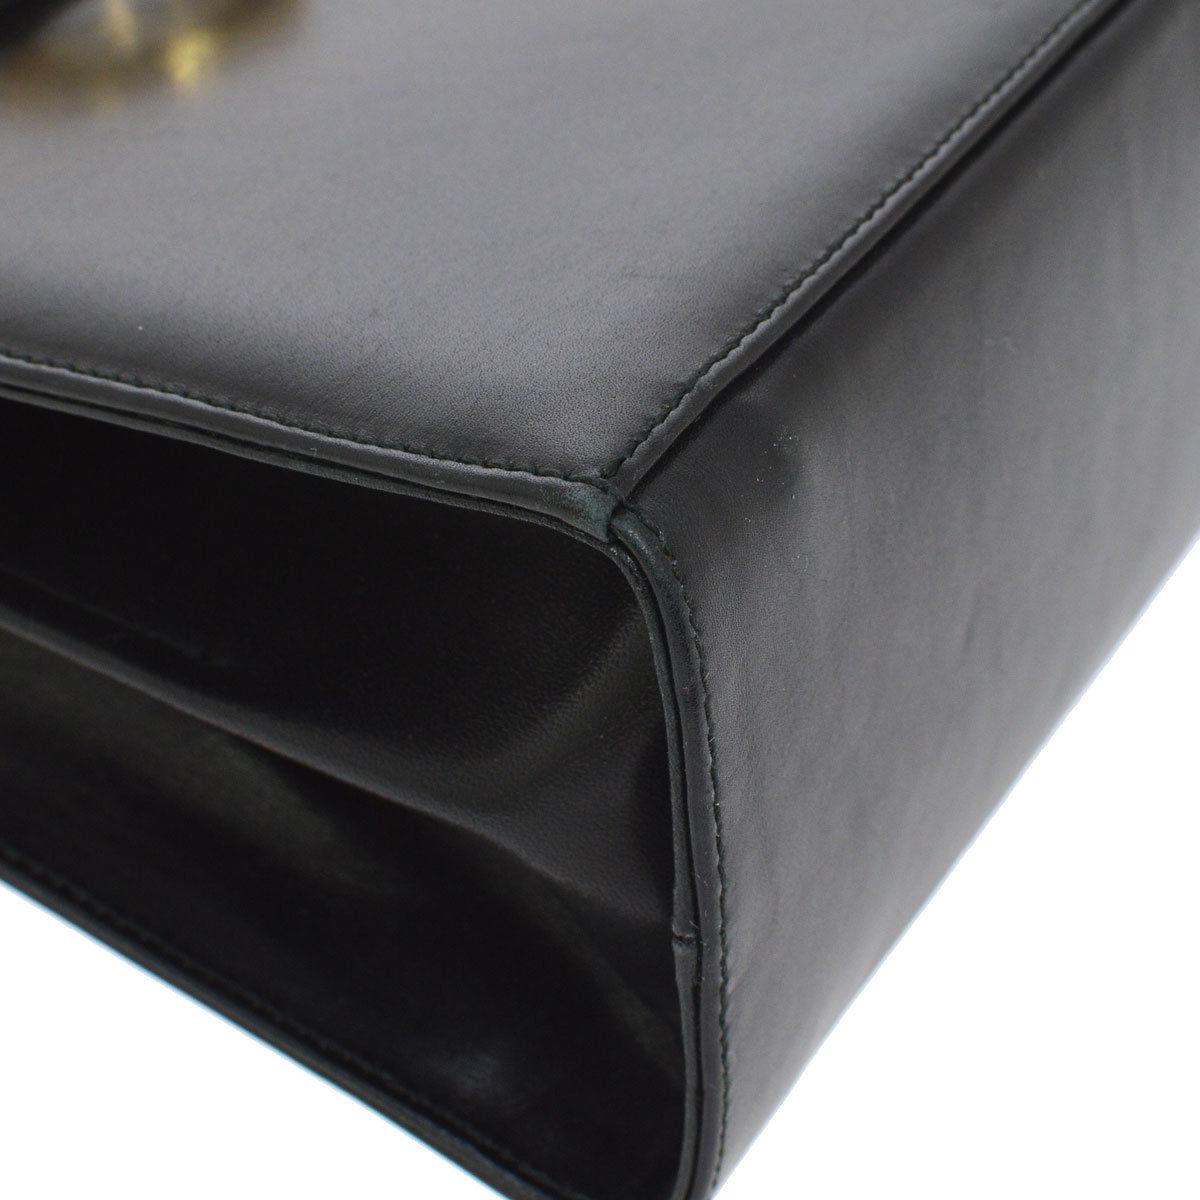 Salvatore Ferragamo Black Leather Gold Kelly Style Top Handle Mini Bag ...